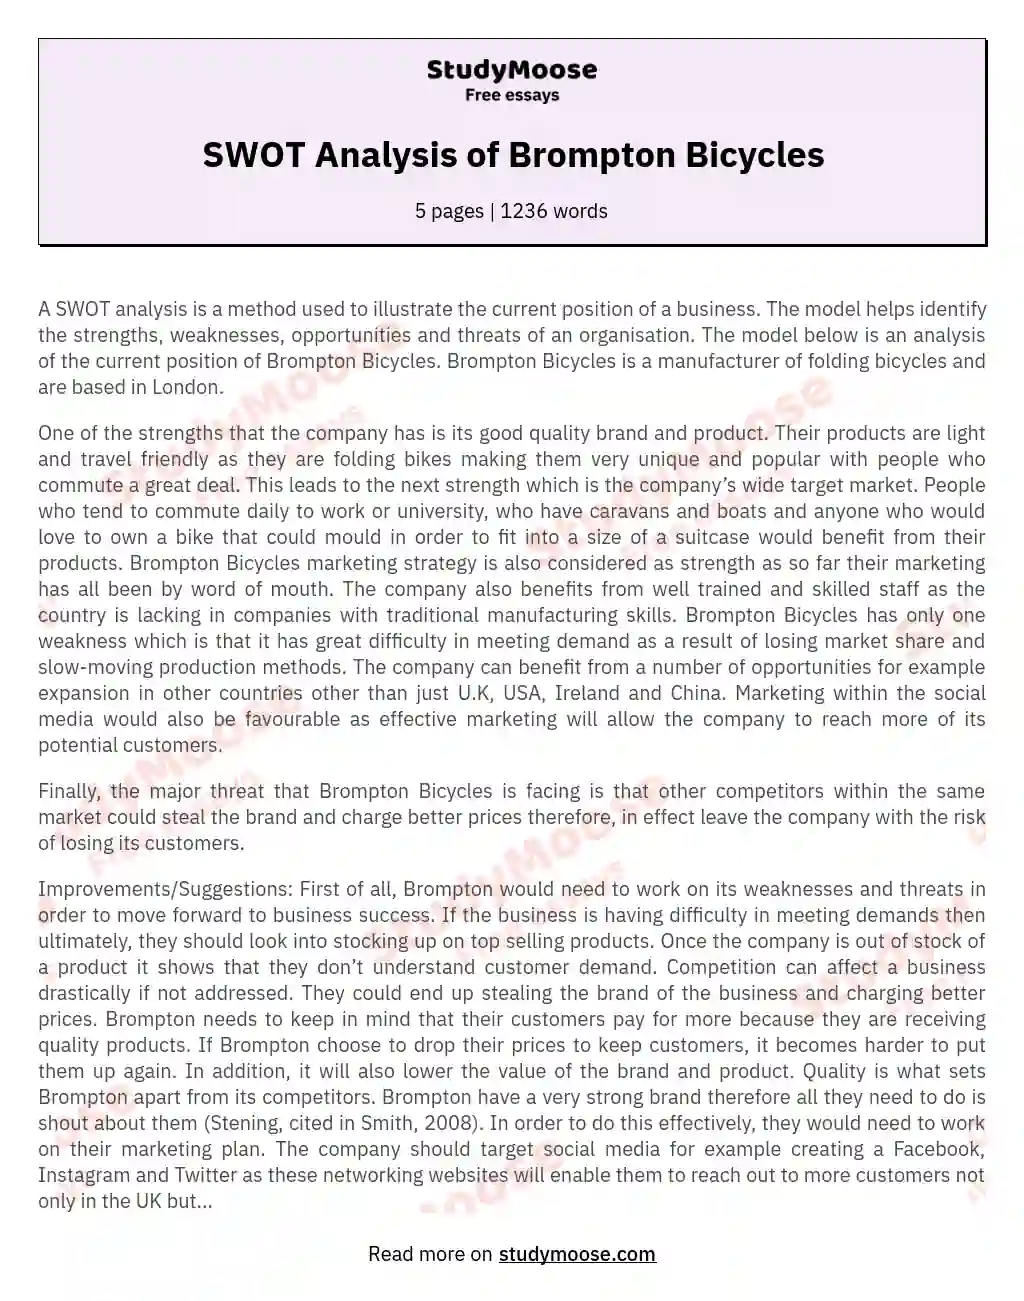 SWOT Analysis of Brompton Bicycles essay